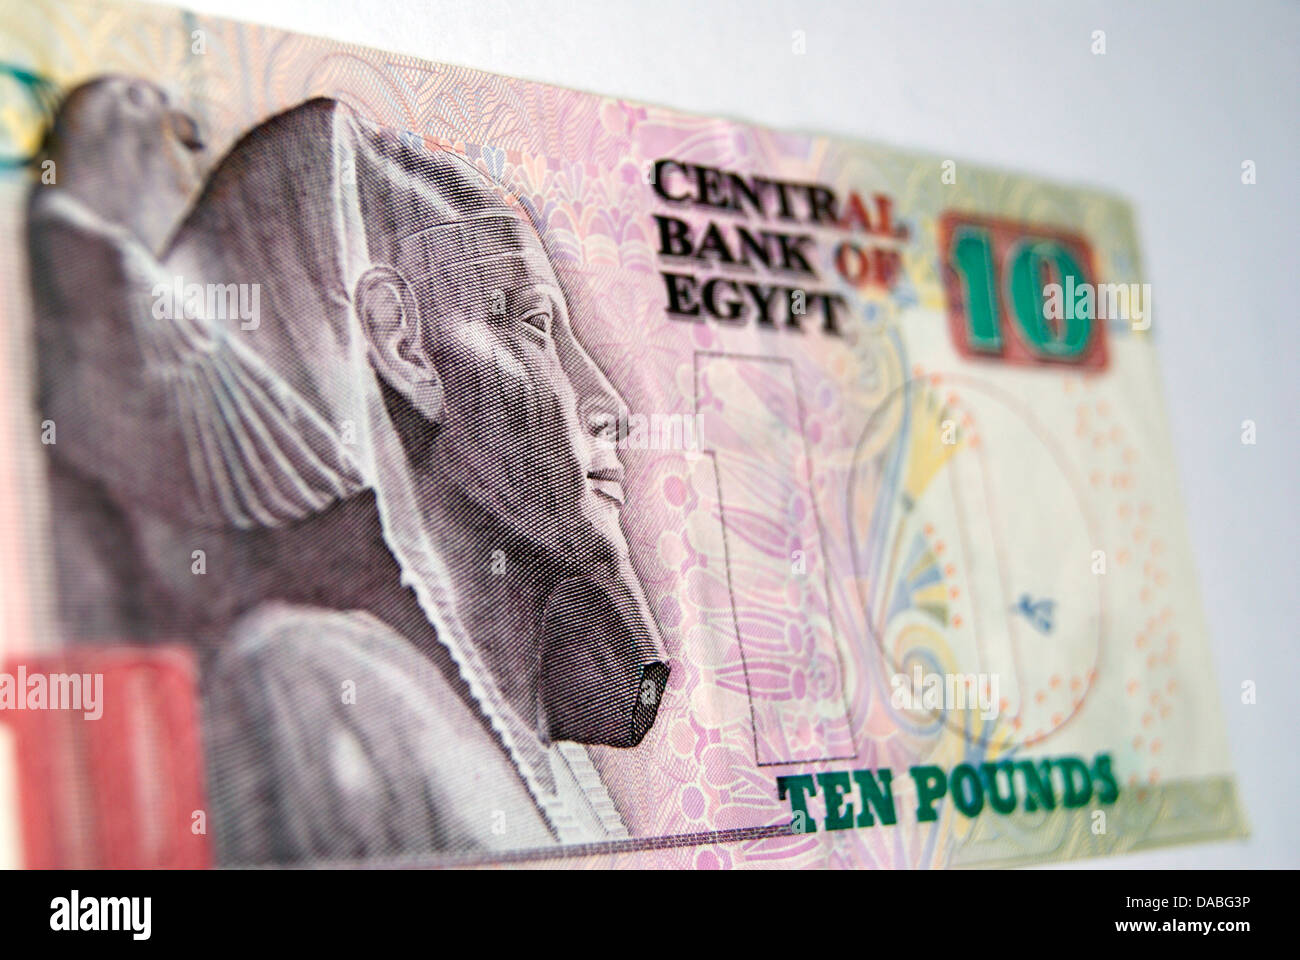 Egypt Currency Note Ten Pounds Egyptian pound Stock Photo - Alamy